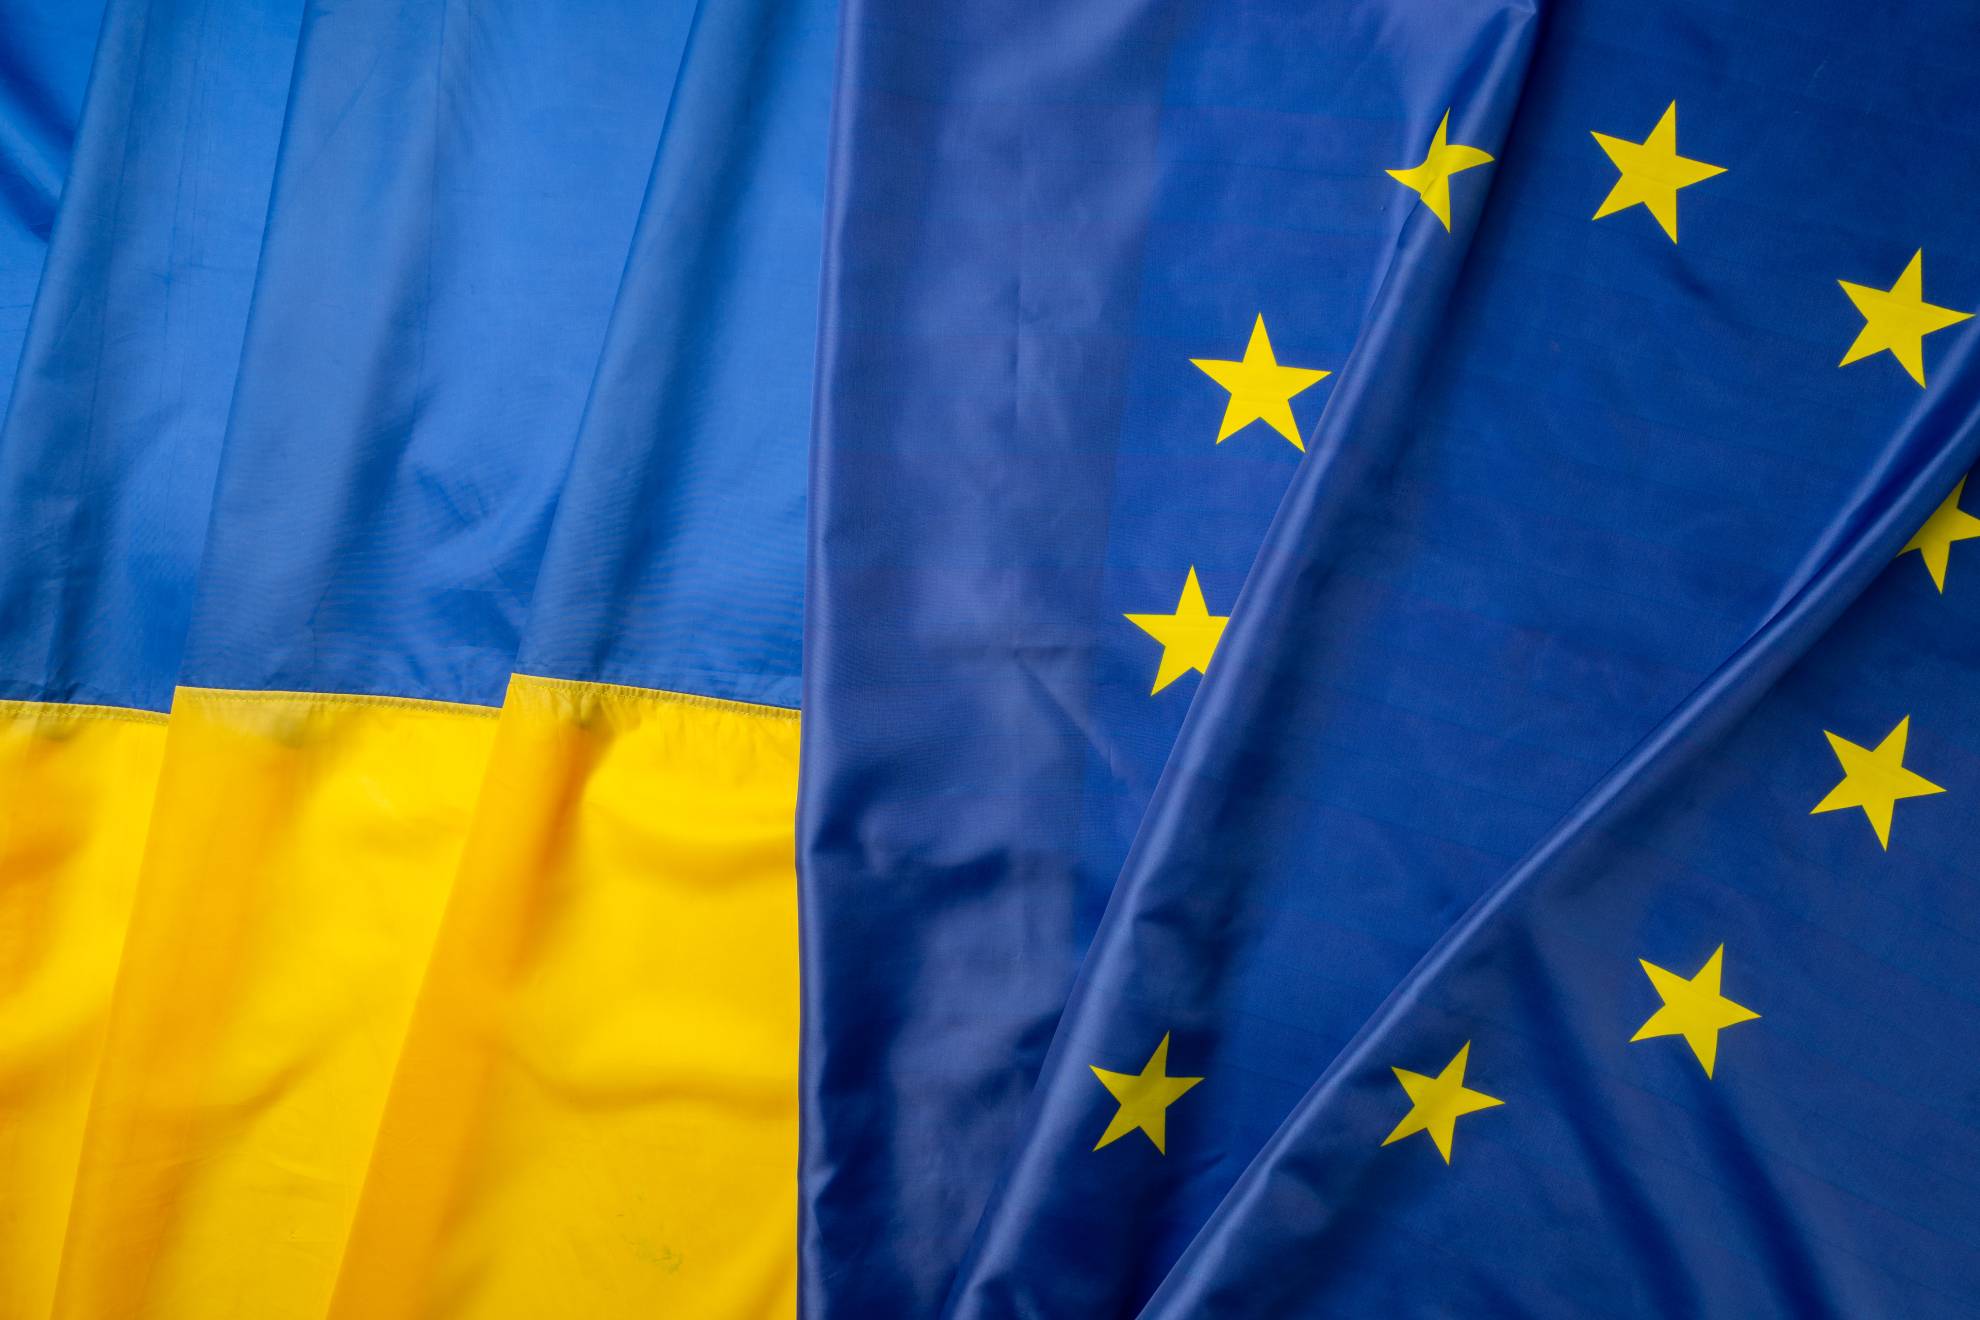 flags-of-ukraine-and-european-union-folded-togethe-2022-02-05-02-37-39-utc (1)